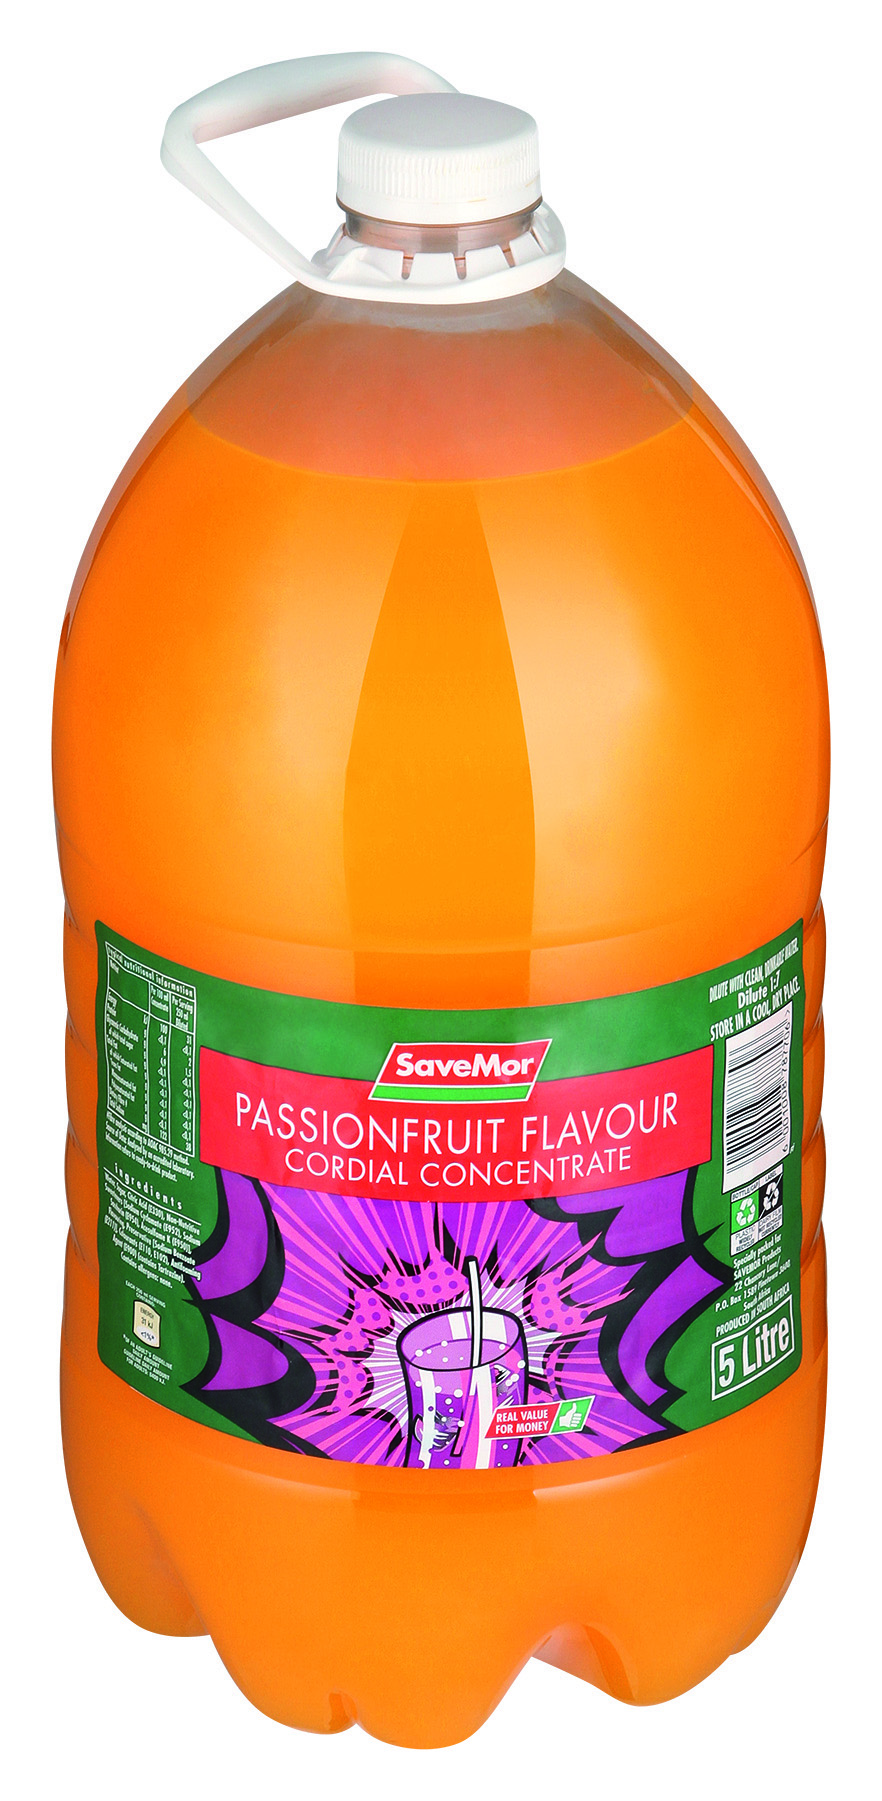 cordial concentrate passionfruit flavour